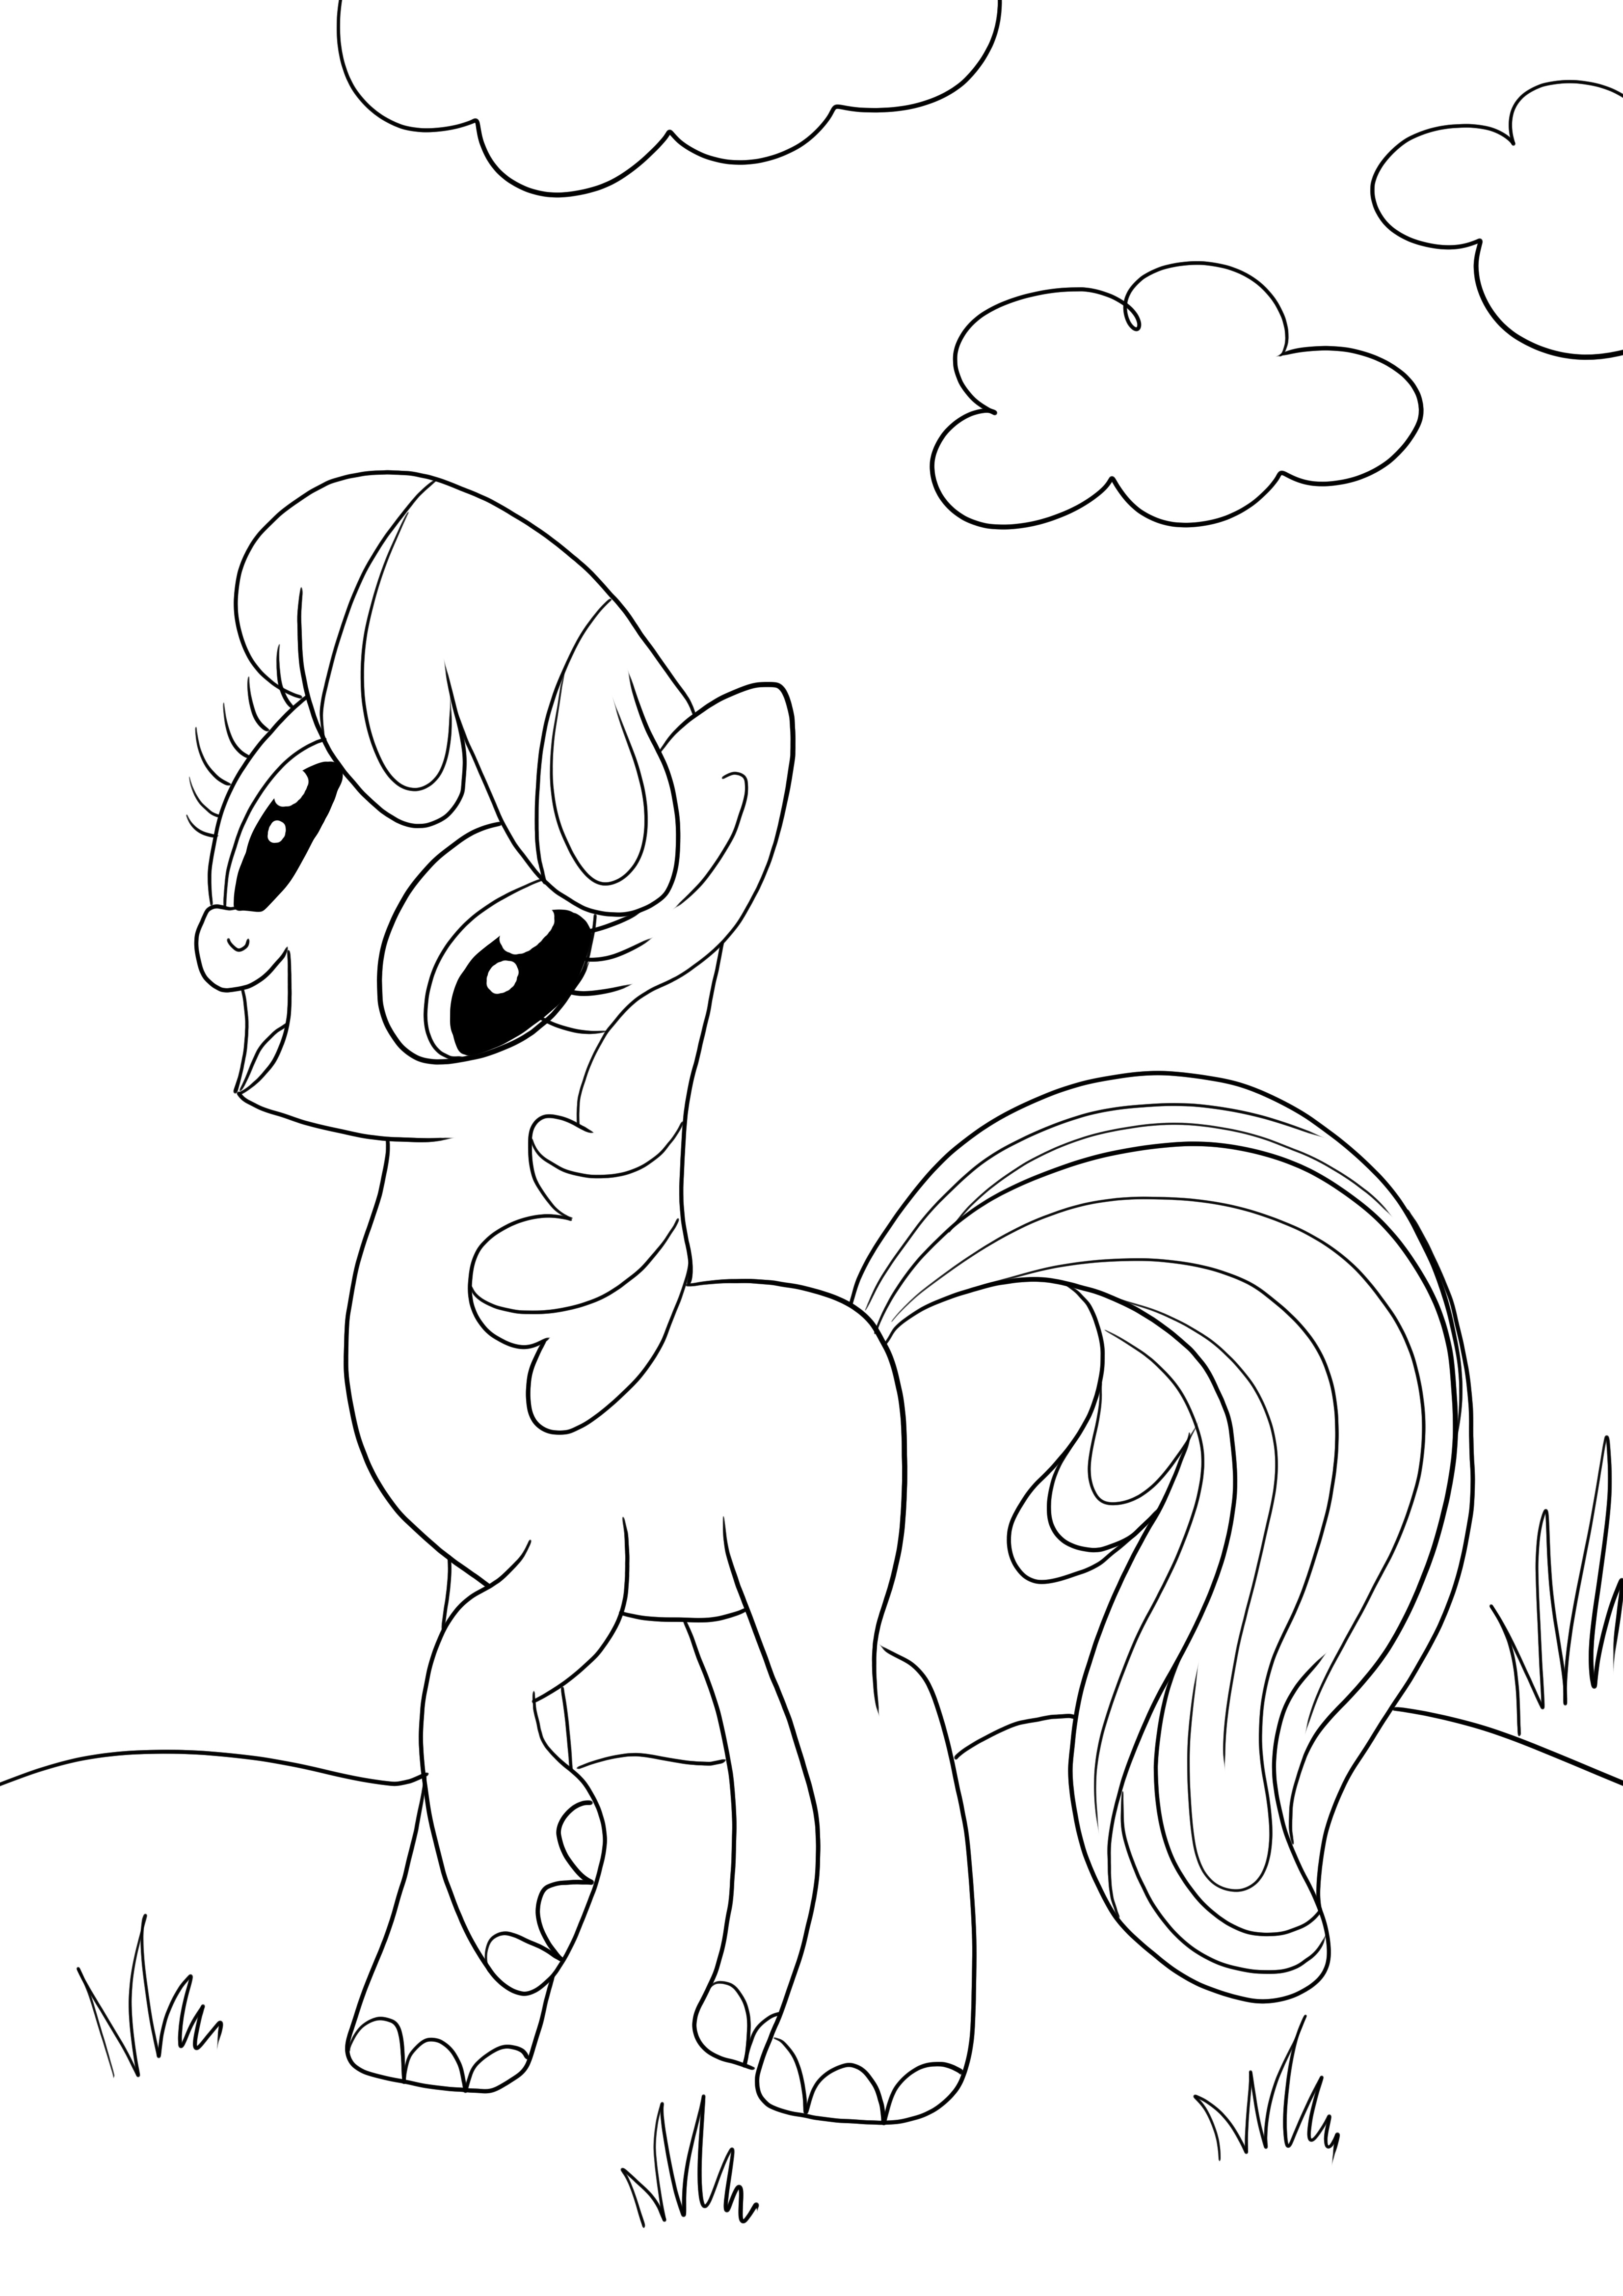 Karakter Little Pony Cheerilee untuk diwarnai secara gratis